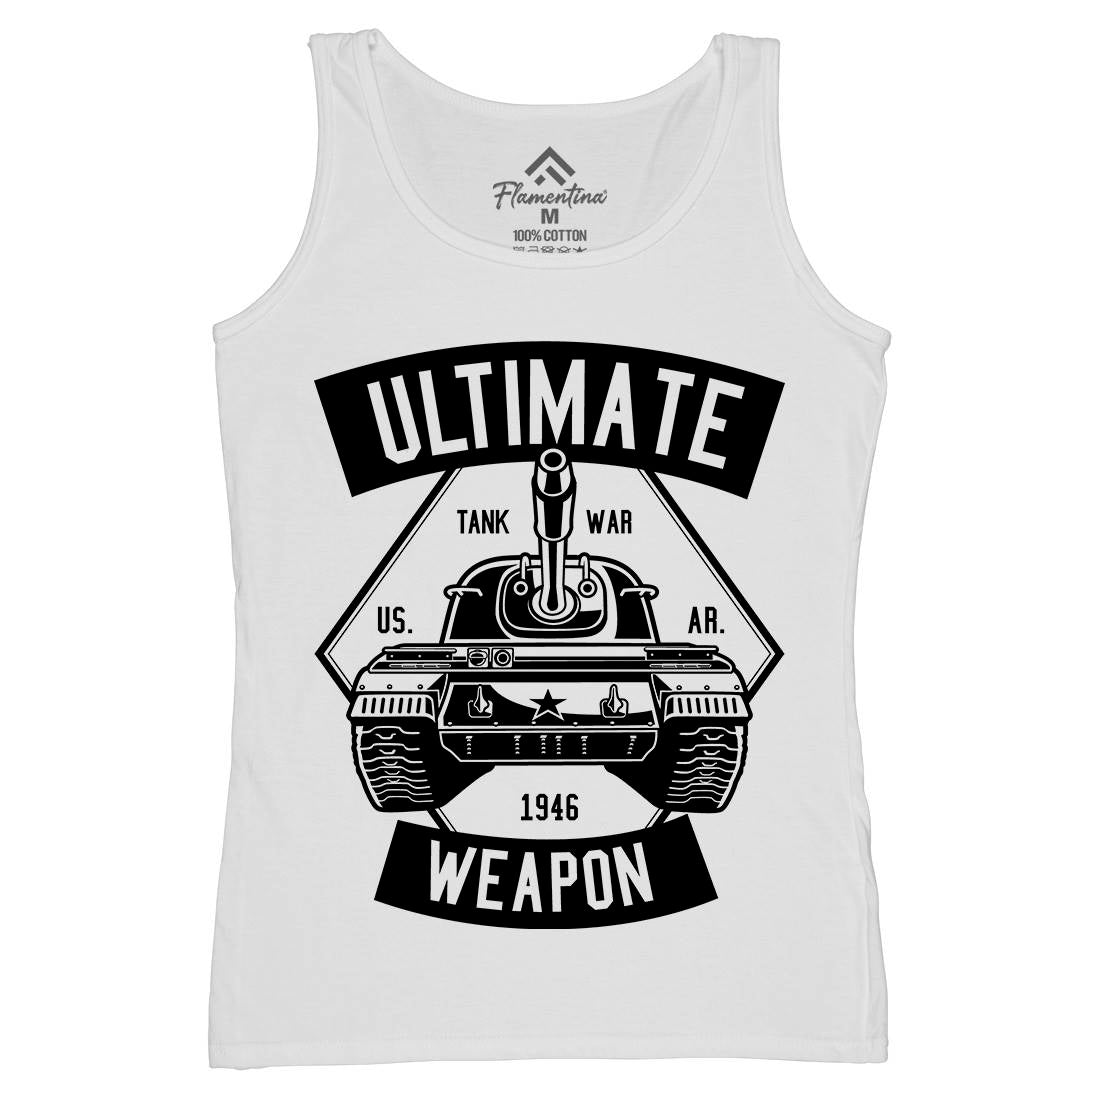 Tank War Ultimate Weapon Womens Organic Tank Top Vest Army B649